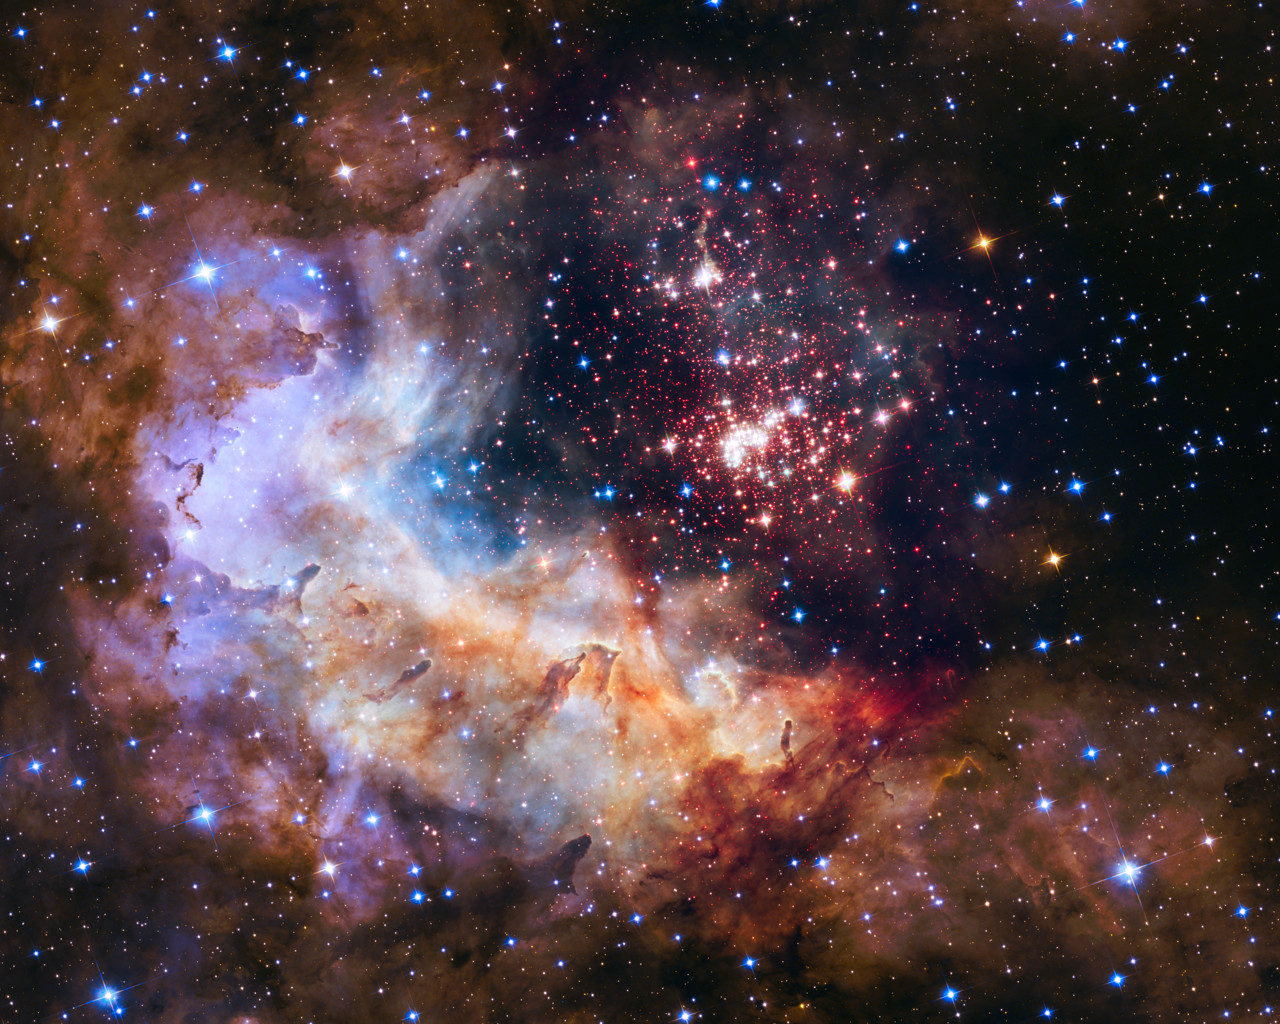 Top Image Esa Hubble